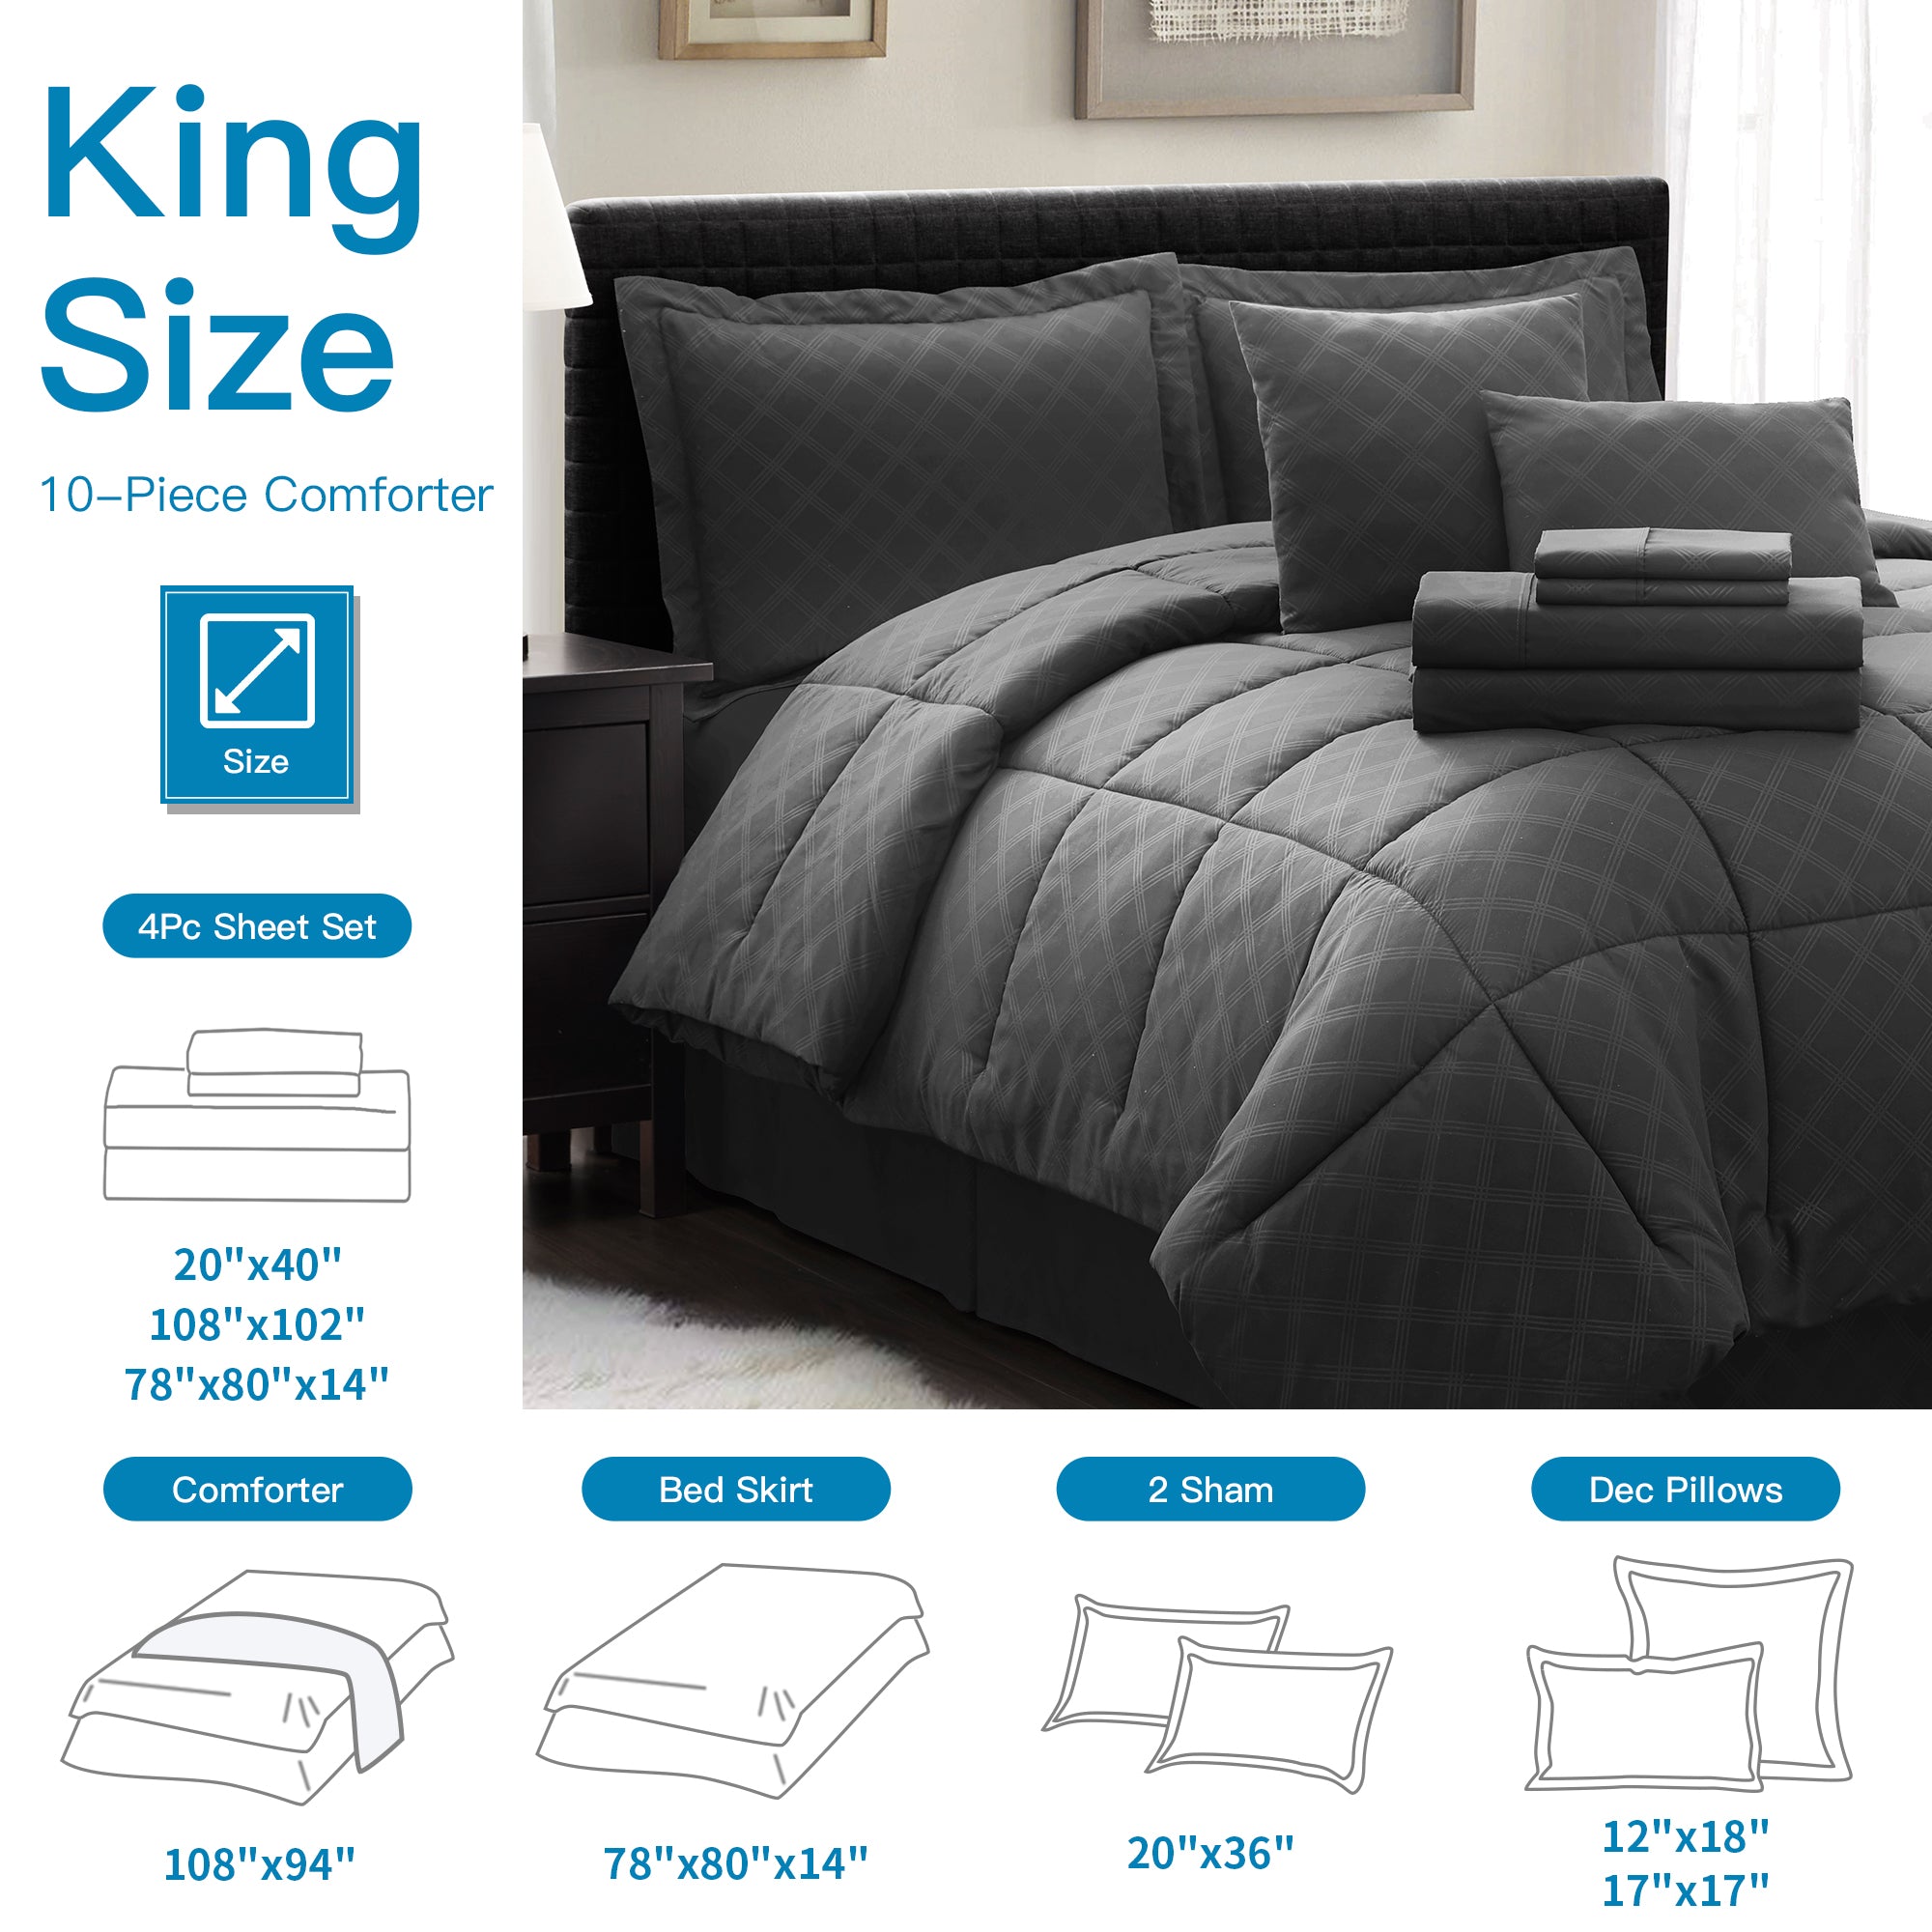 10PC Collection Bed In A Bag Comforter Set Piece HotelC | Spirit Linen - Black